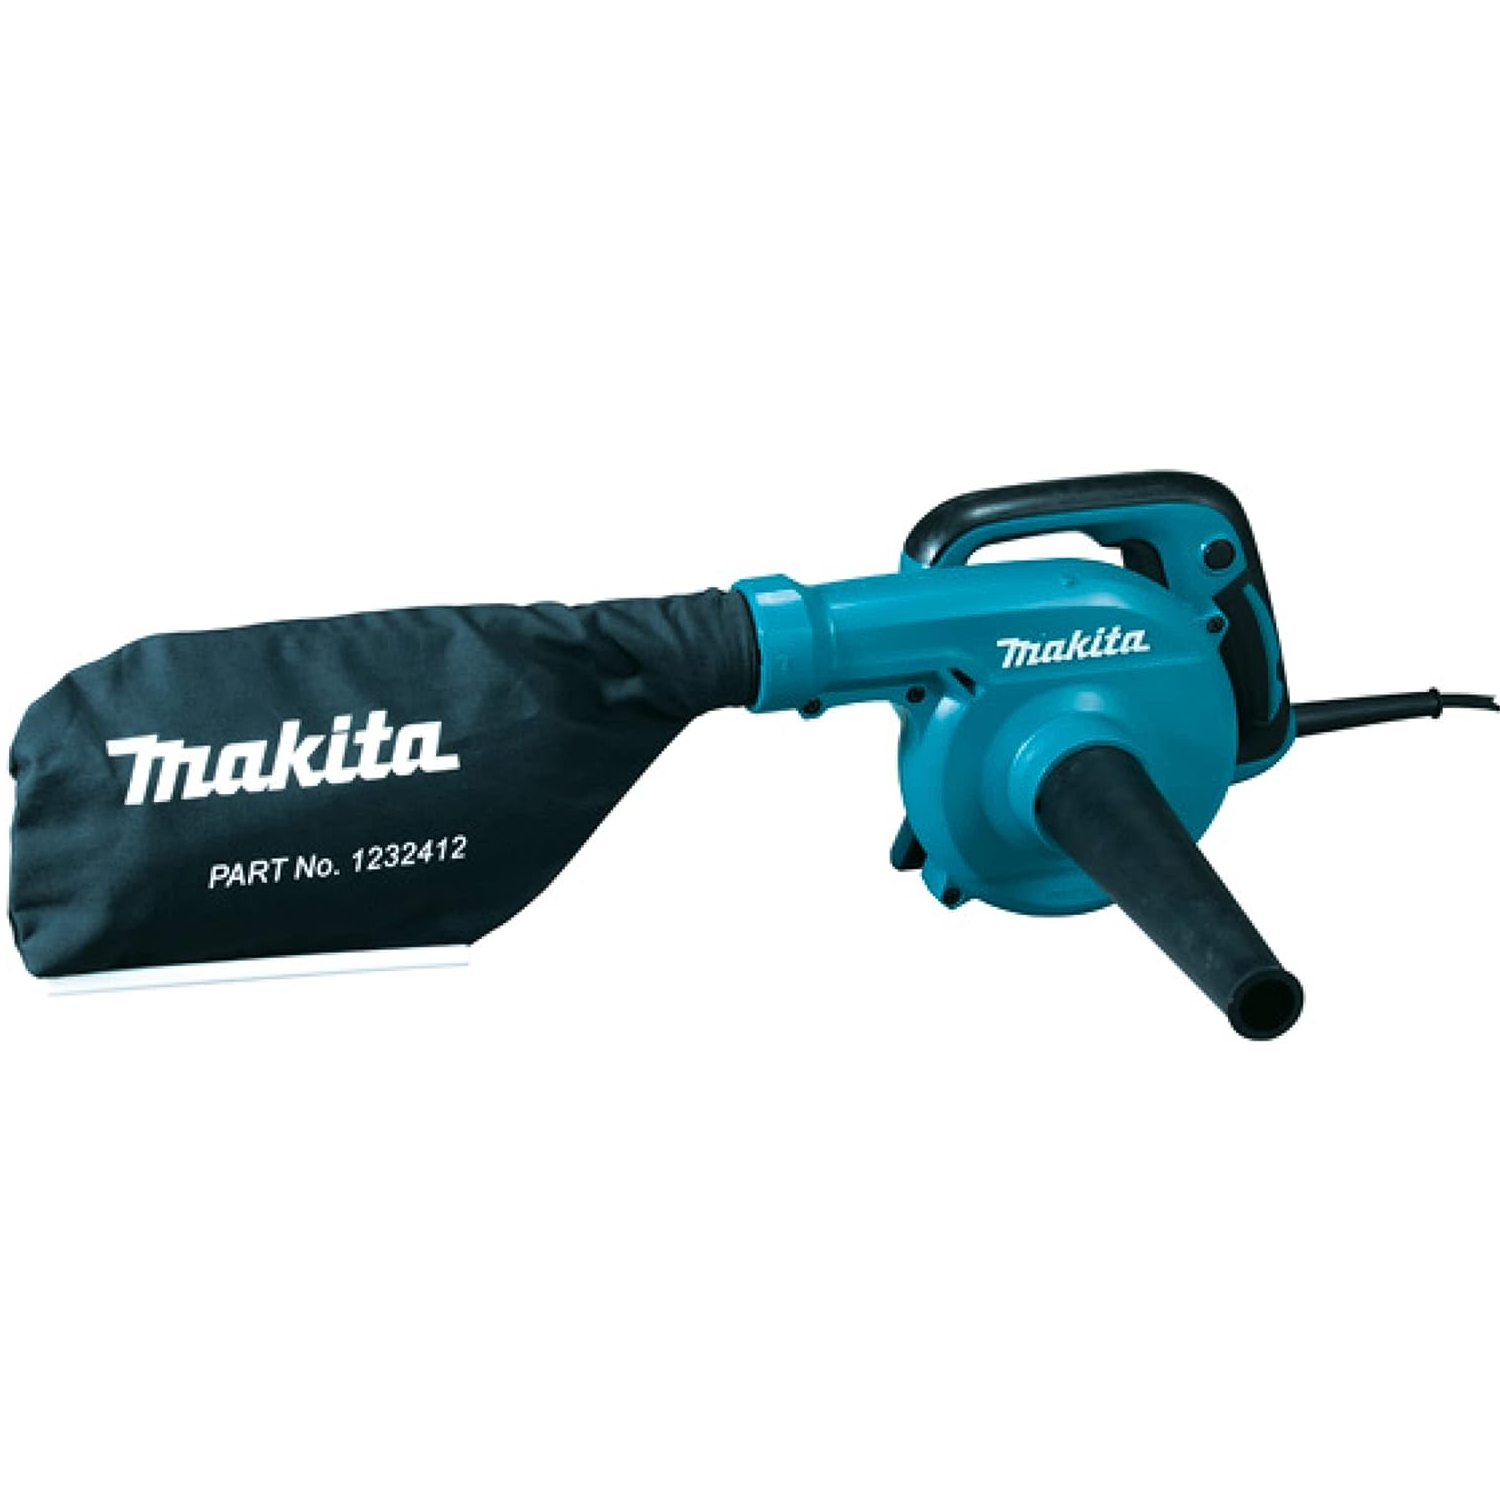 Makita ub1103/2 240v blower/vacuum with dust bag